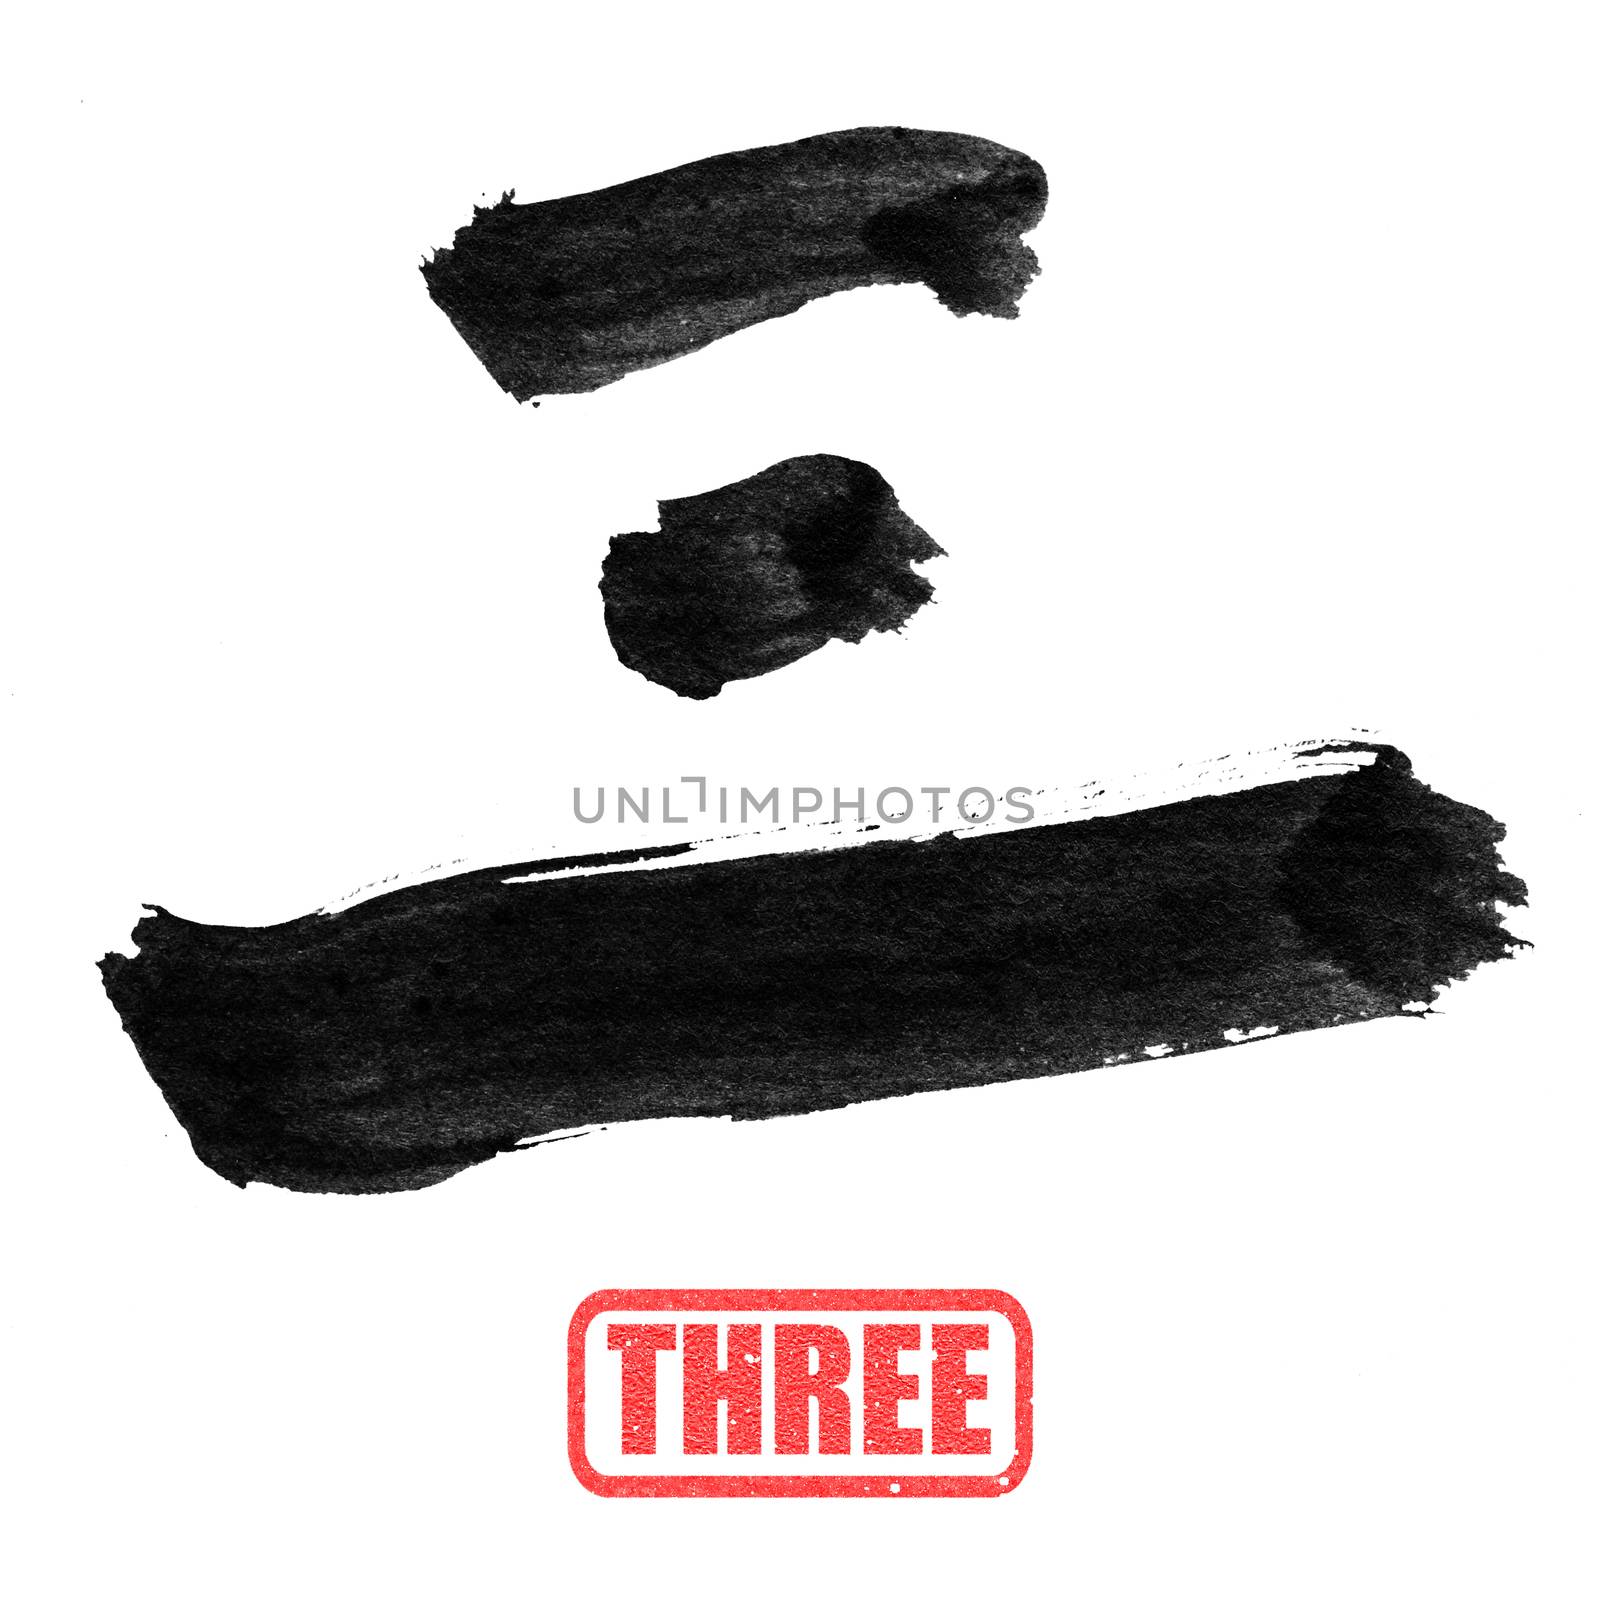 Chinese number word, three by elwynn